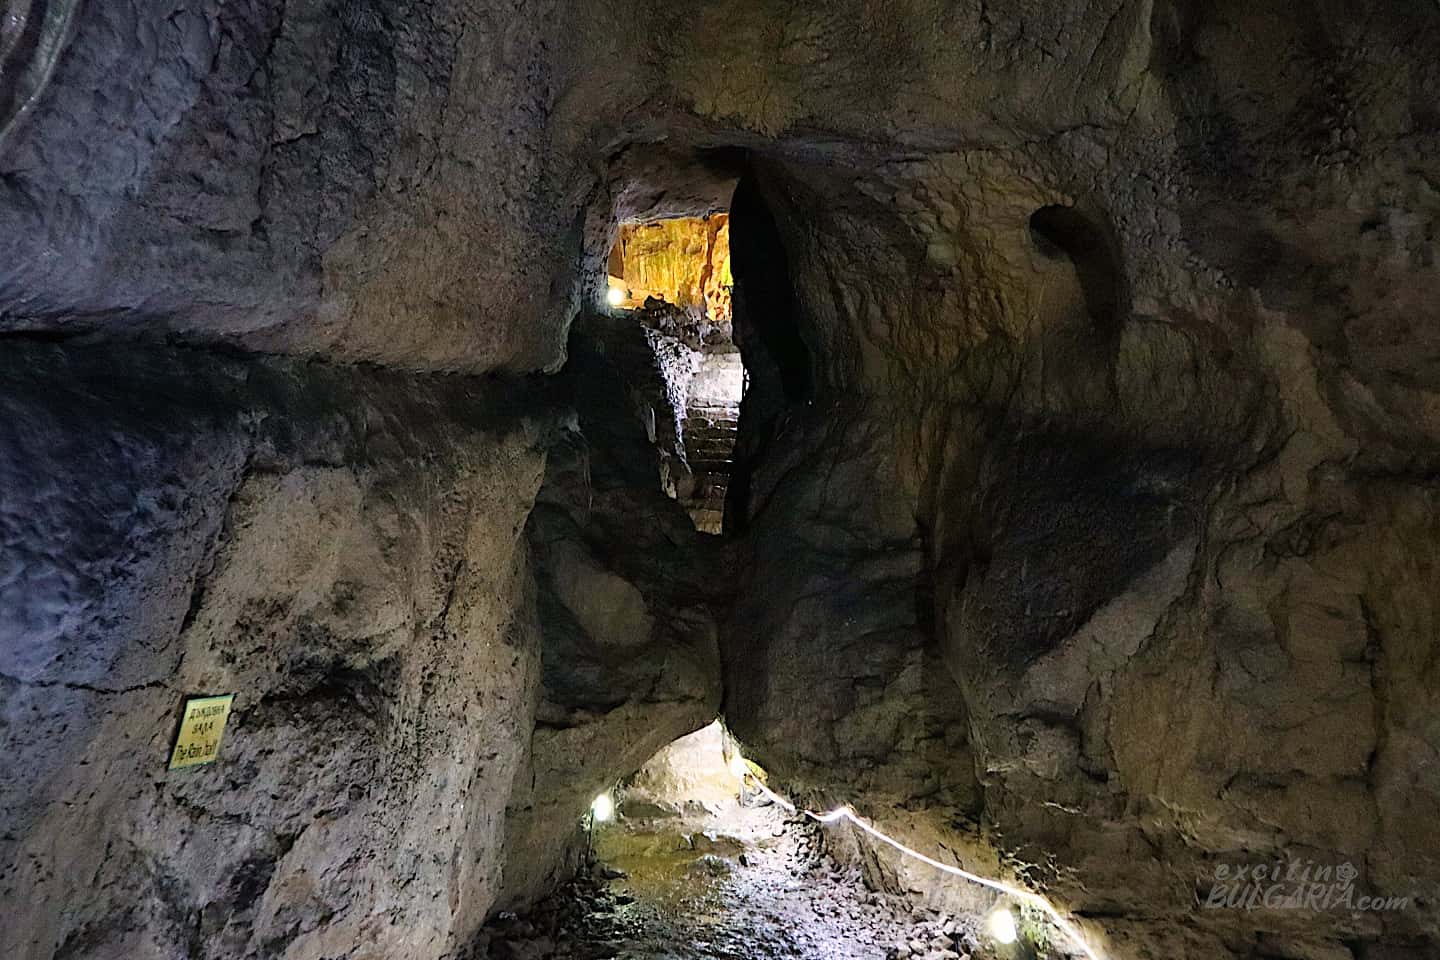 The Rain Hall in the Bacho Kiro cave